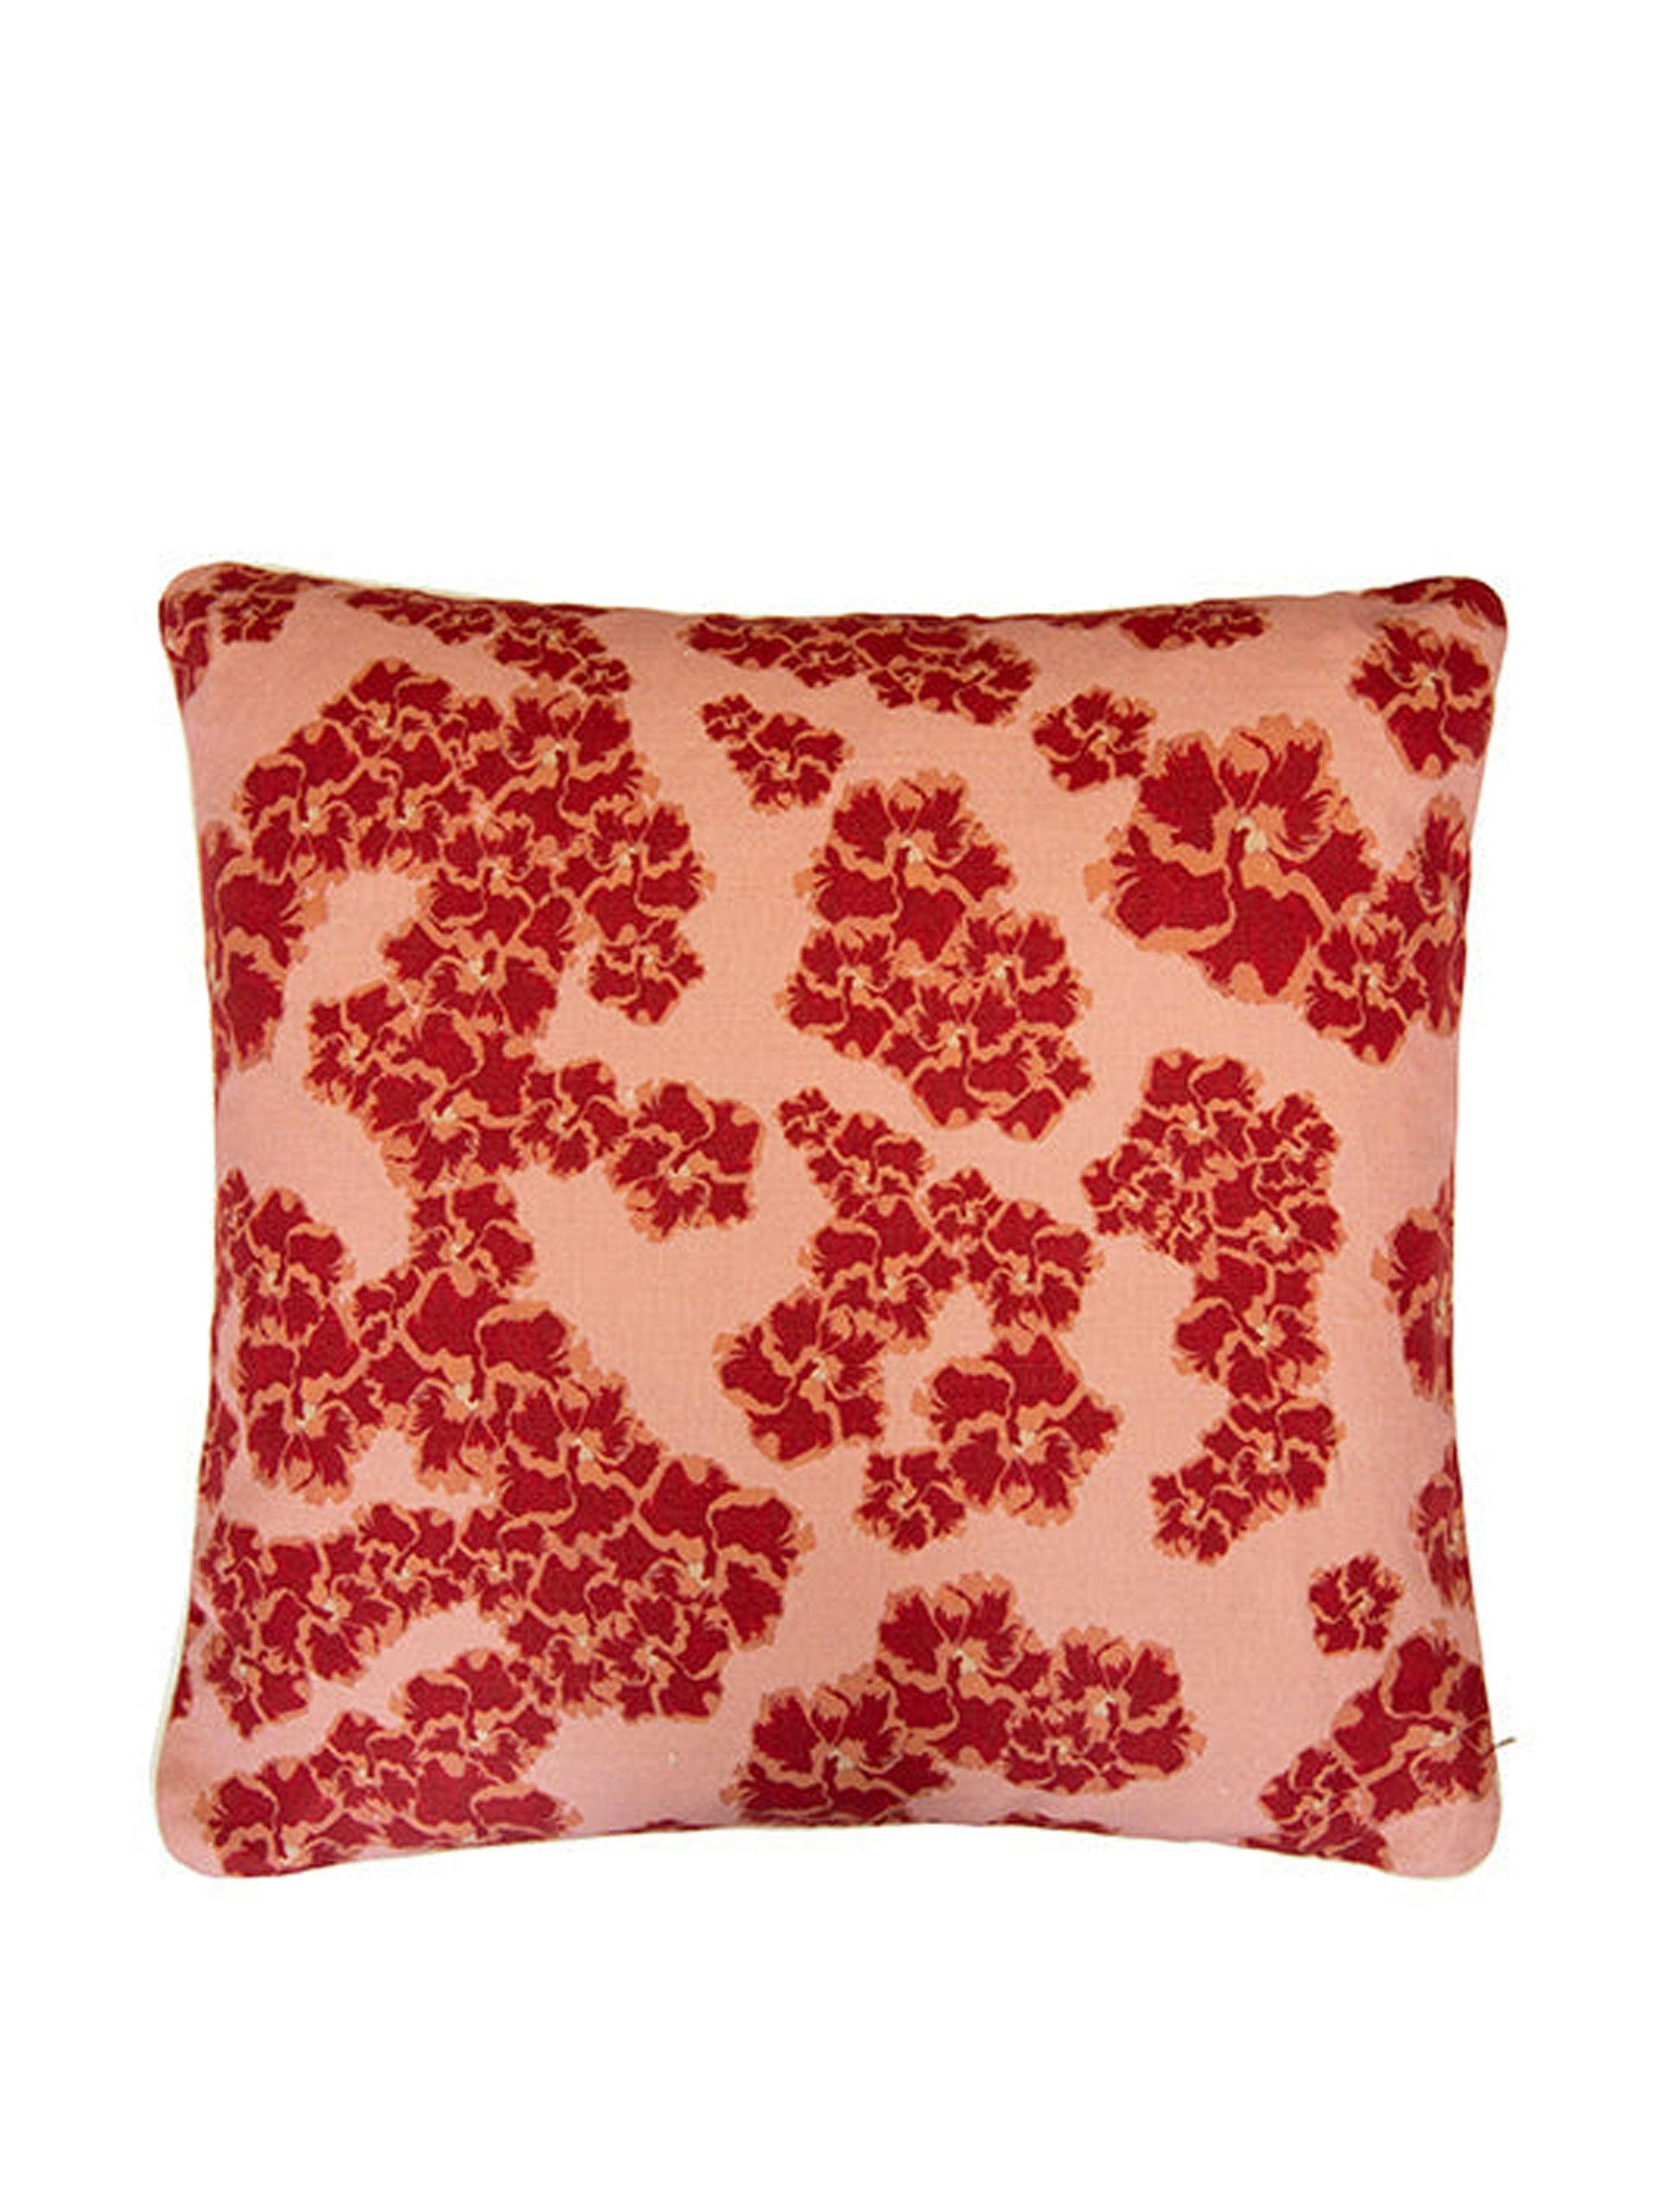 Ronko Hibiscus rose mallow large cushion